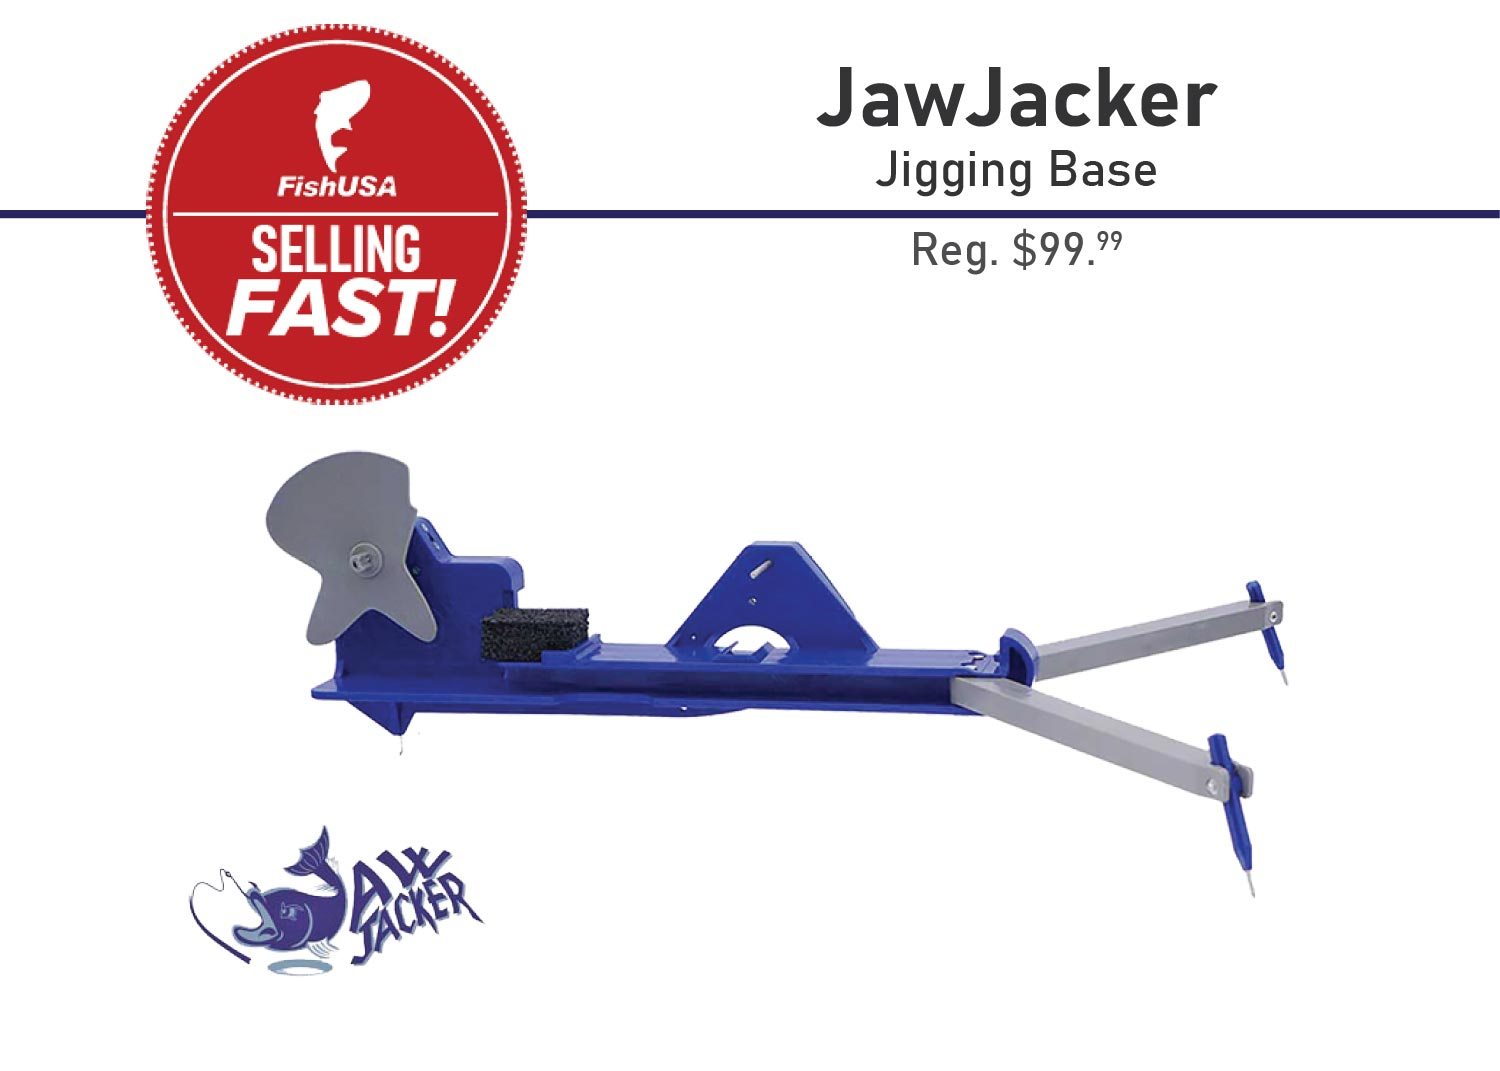 JawJacker Jigging Base Reg. $99.99